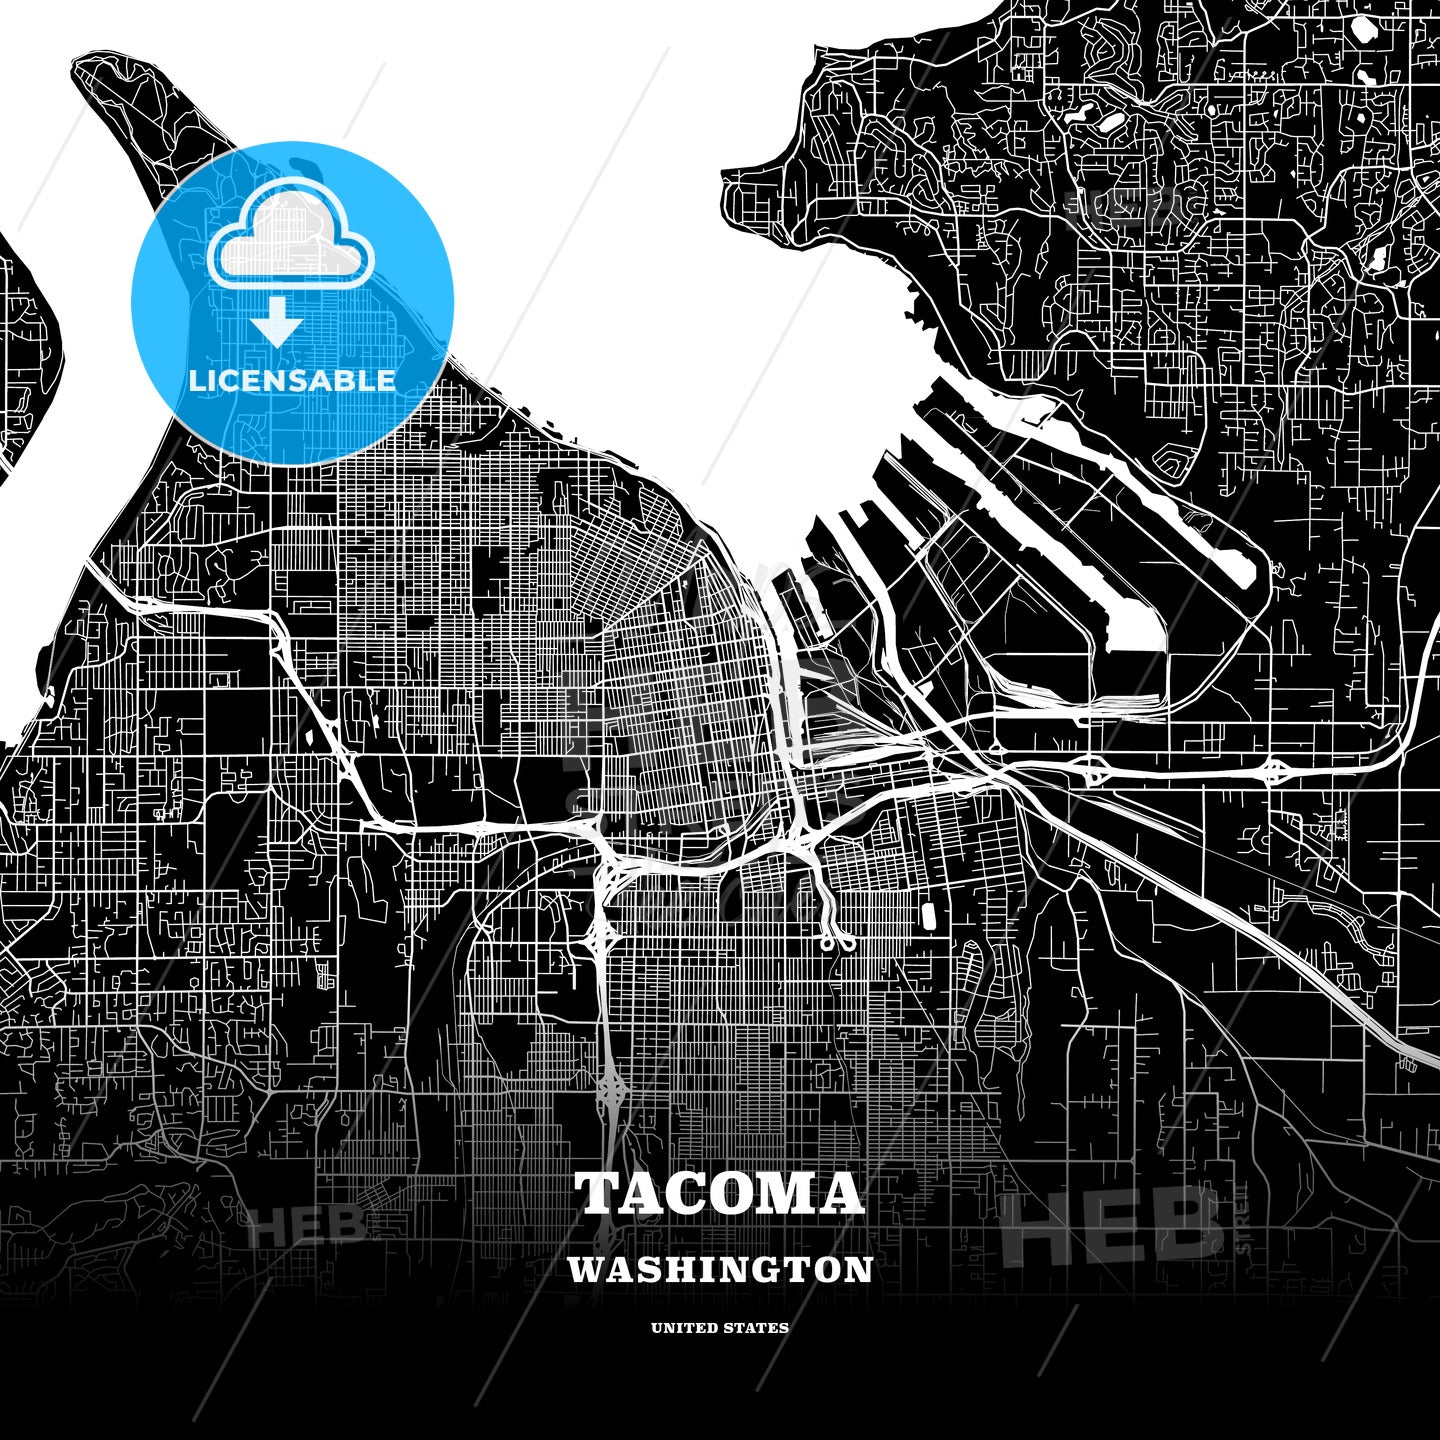 Tacoma, Washington, USA map